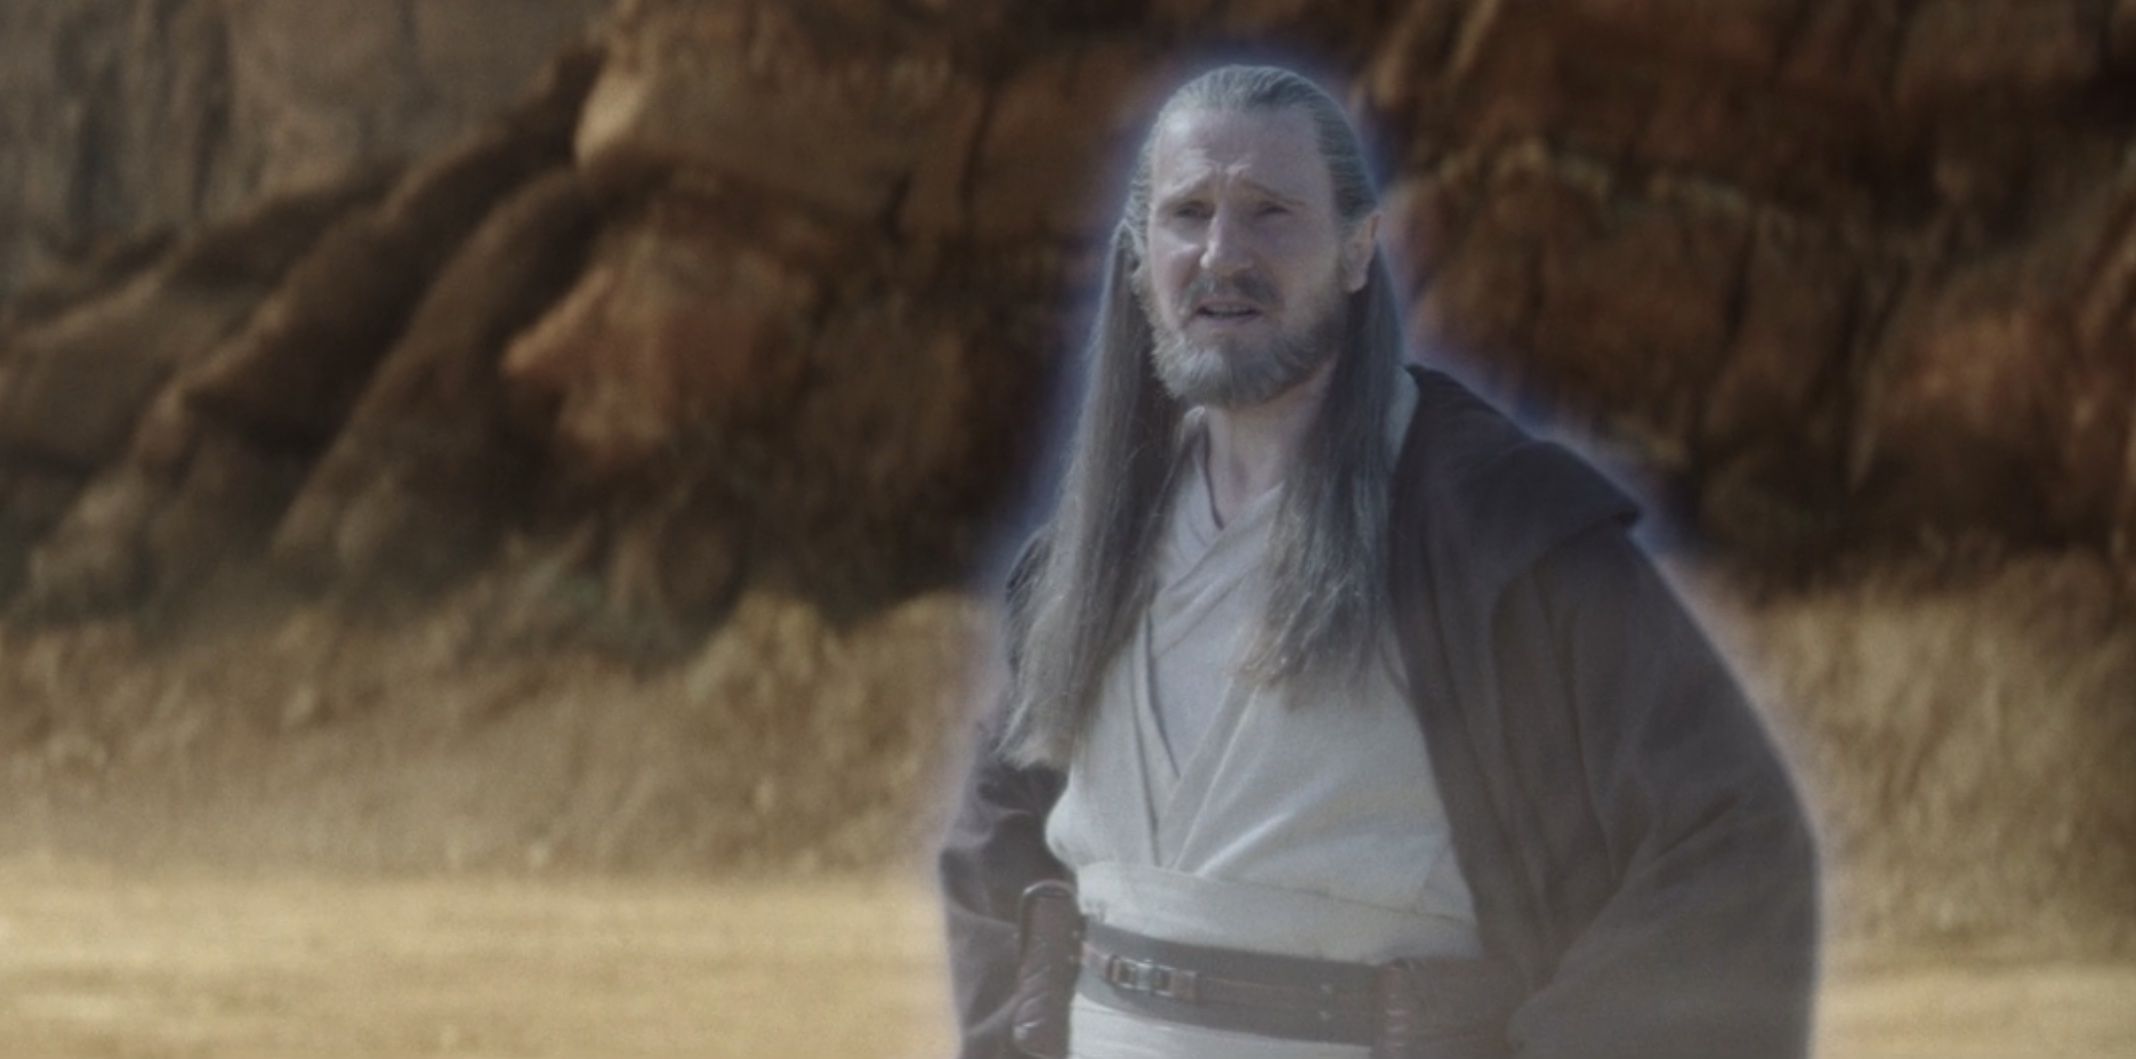 Will there be an Obi-Wan Kenobi season 2?